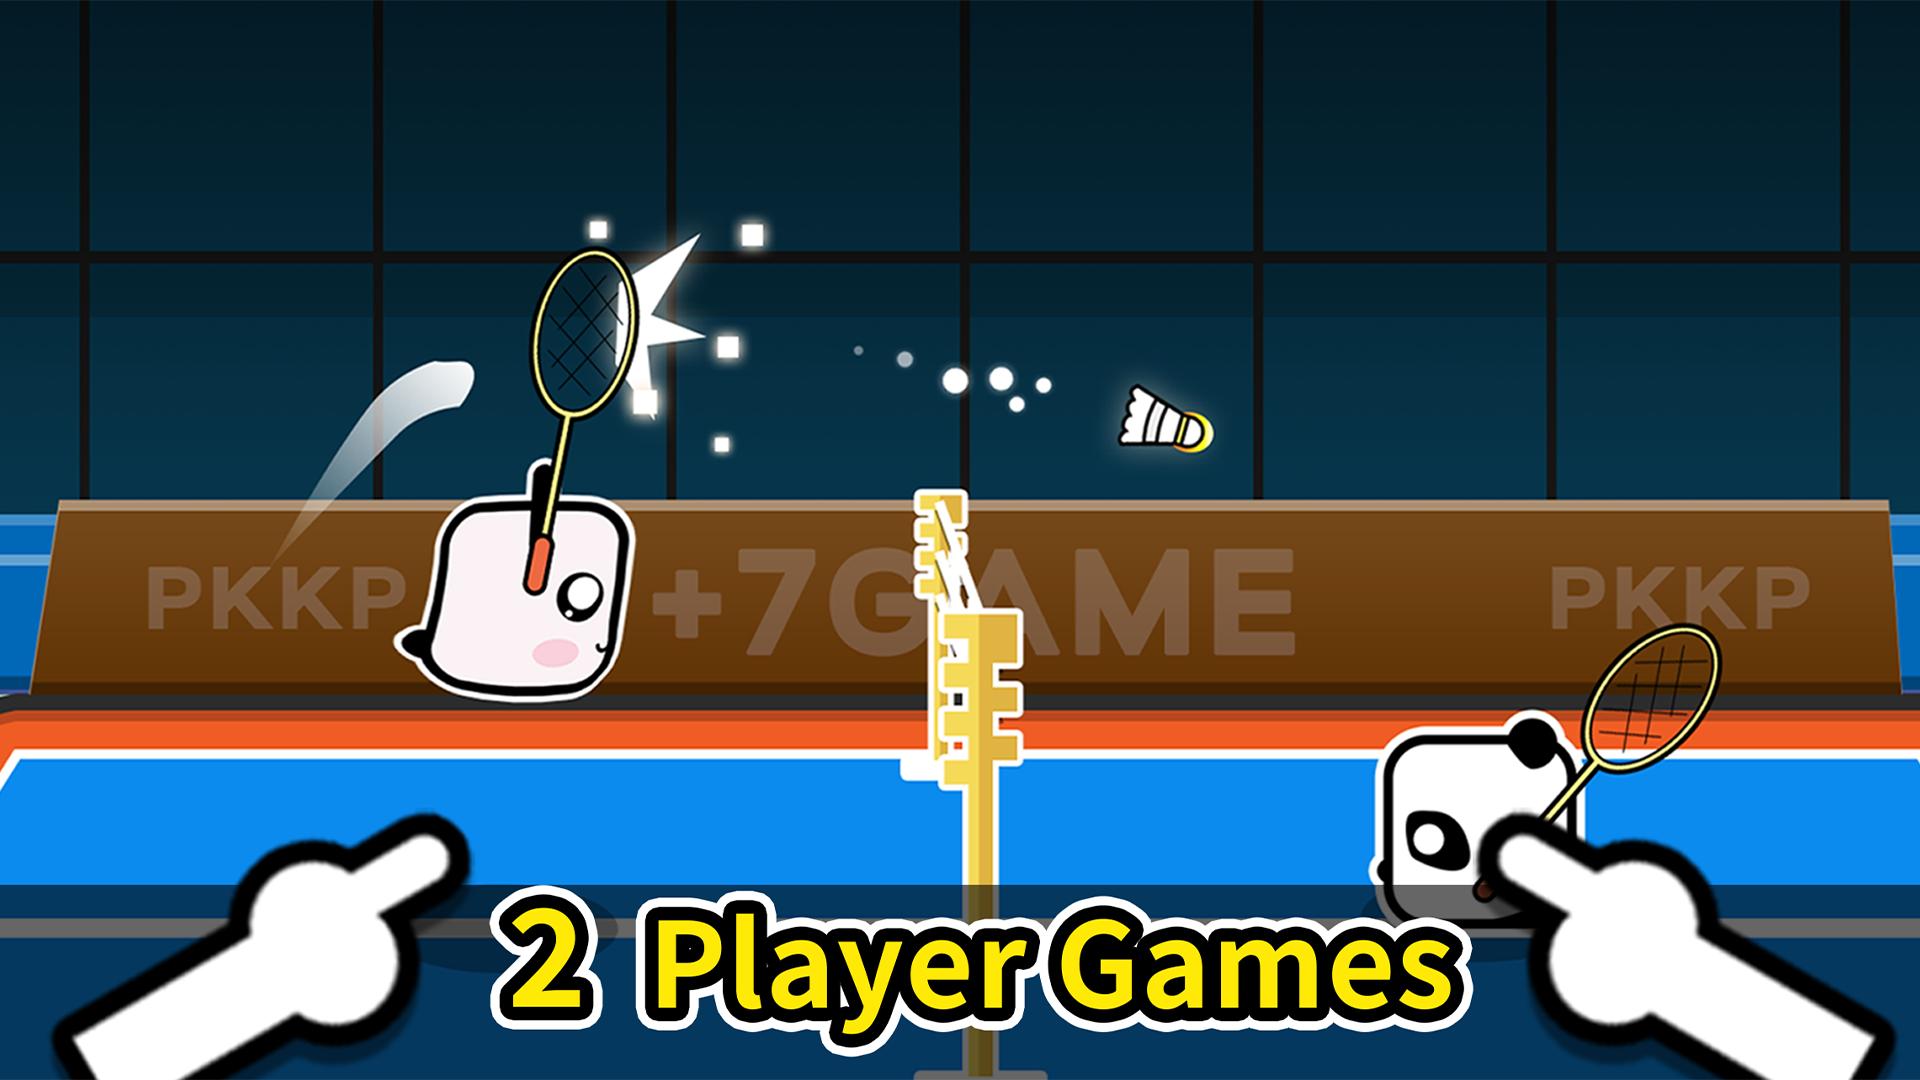 2 Player Games - Pkkp Apk For Android Download